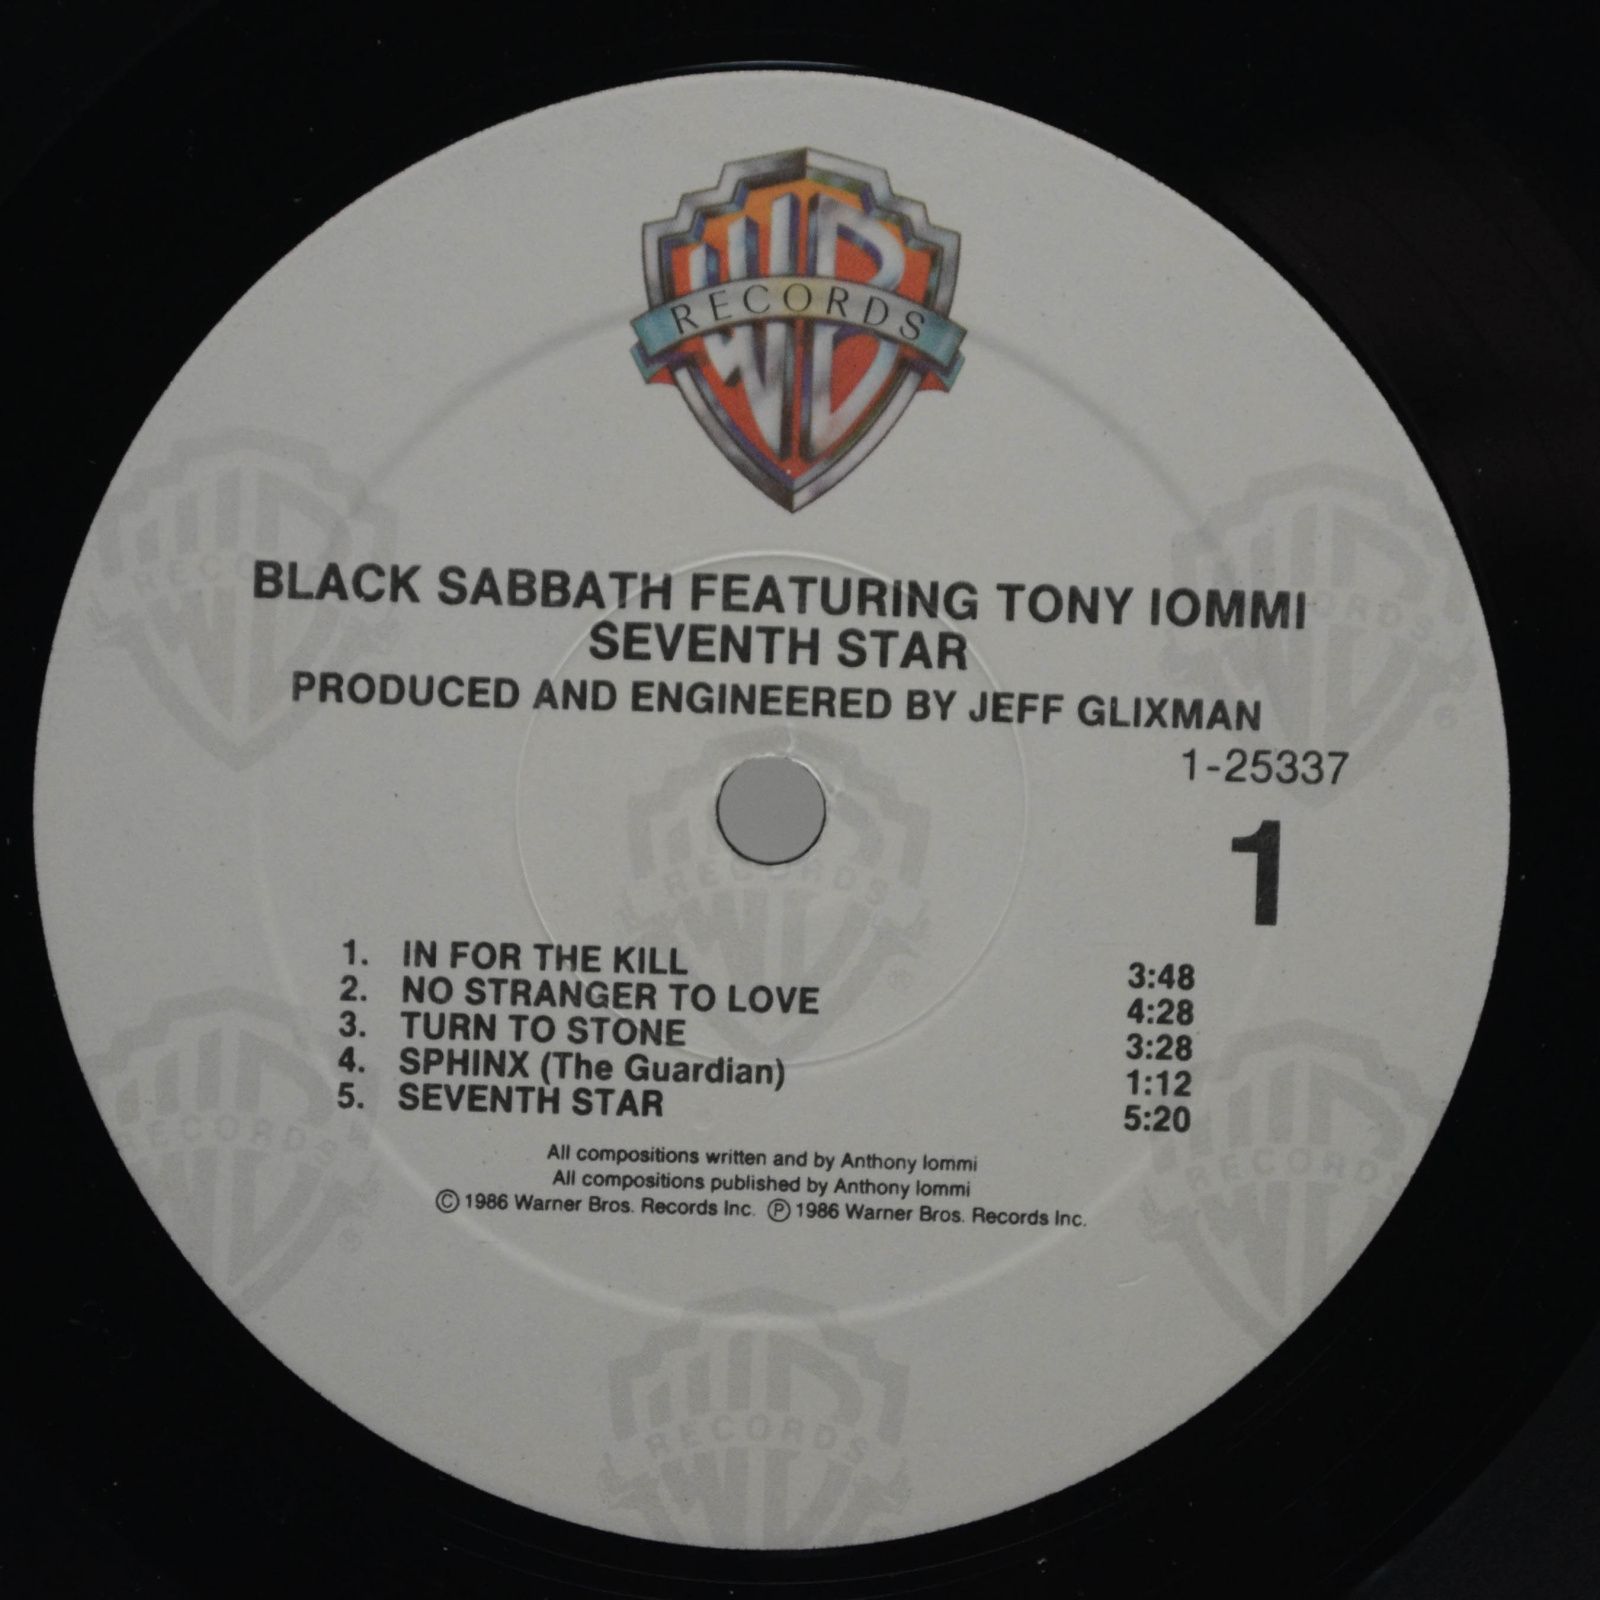 Black Sabbath Featuring Tony Iommi — Seventh Star (USA), 1986